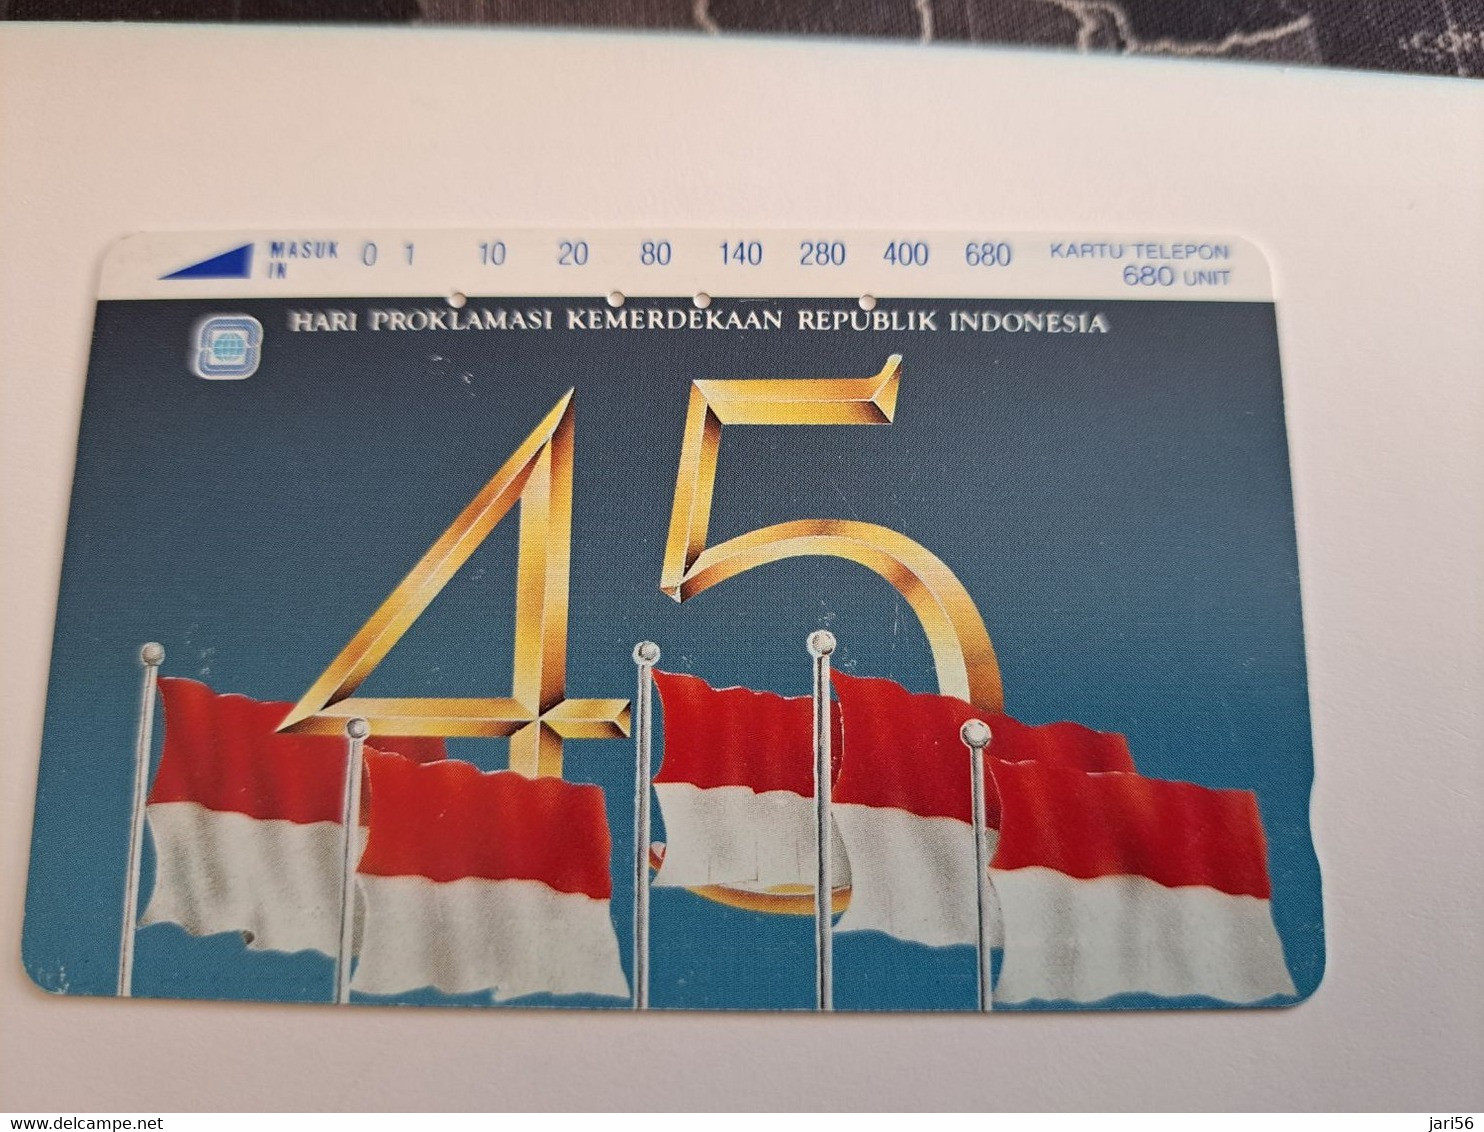 INDONESIA MAGNETIC/TAMURA  680  UNITS /   HARI PROLAMASI KEMERDEKAAN REP INDONESIA     MAGNETIC   CARD    **9799** - Indonesien